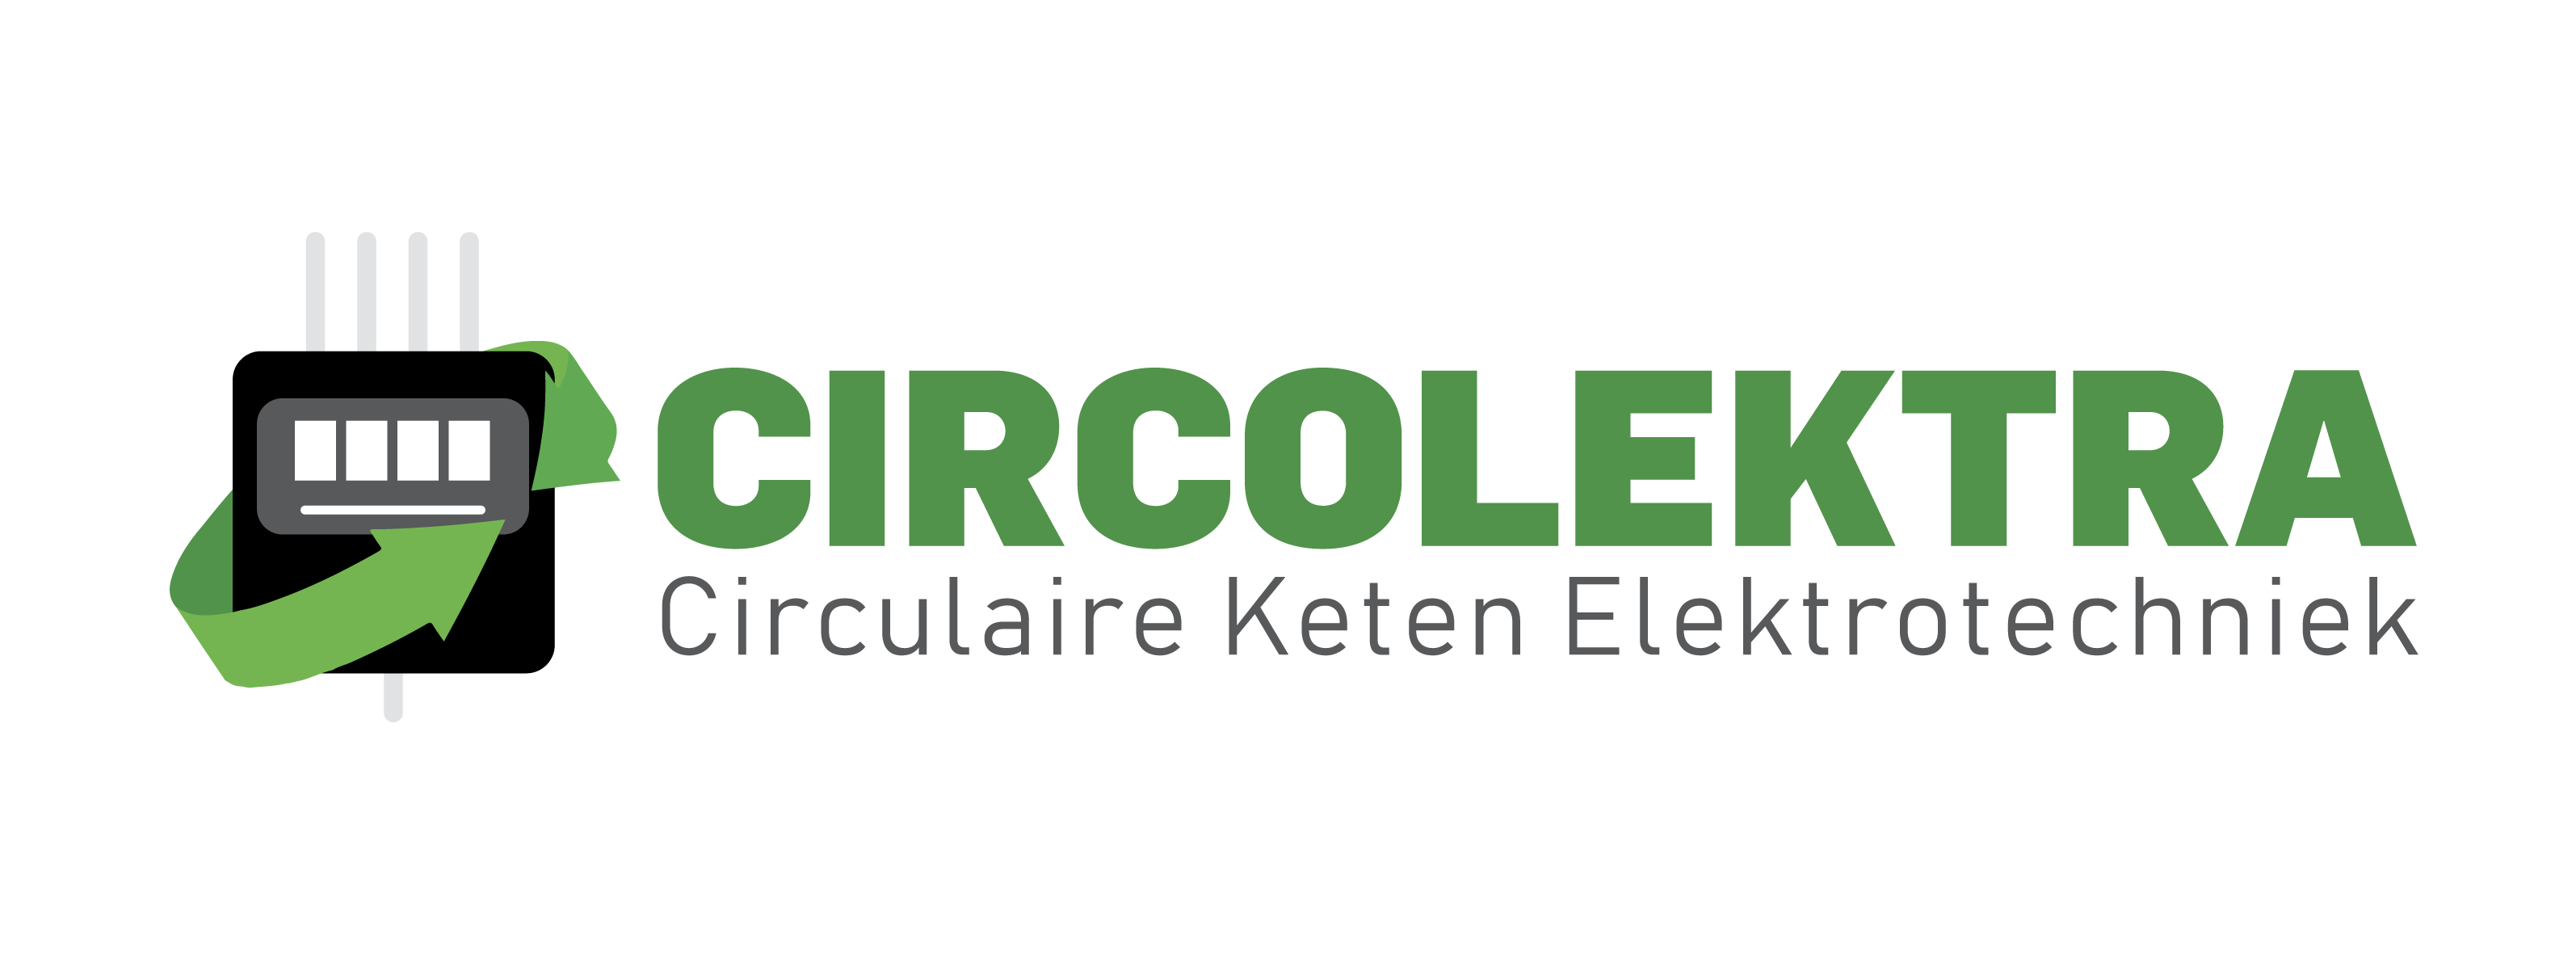 Circolektra logo 2.2